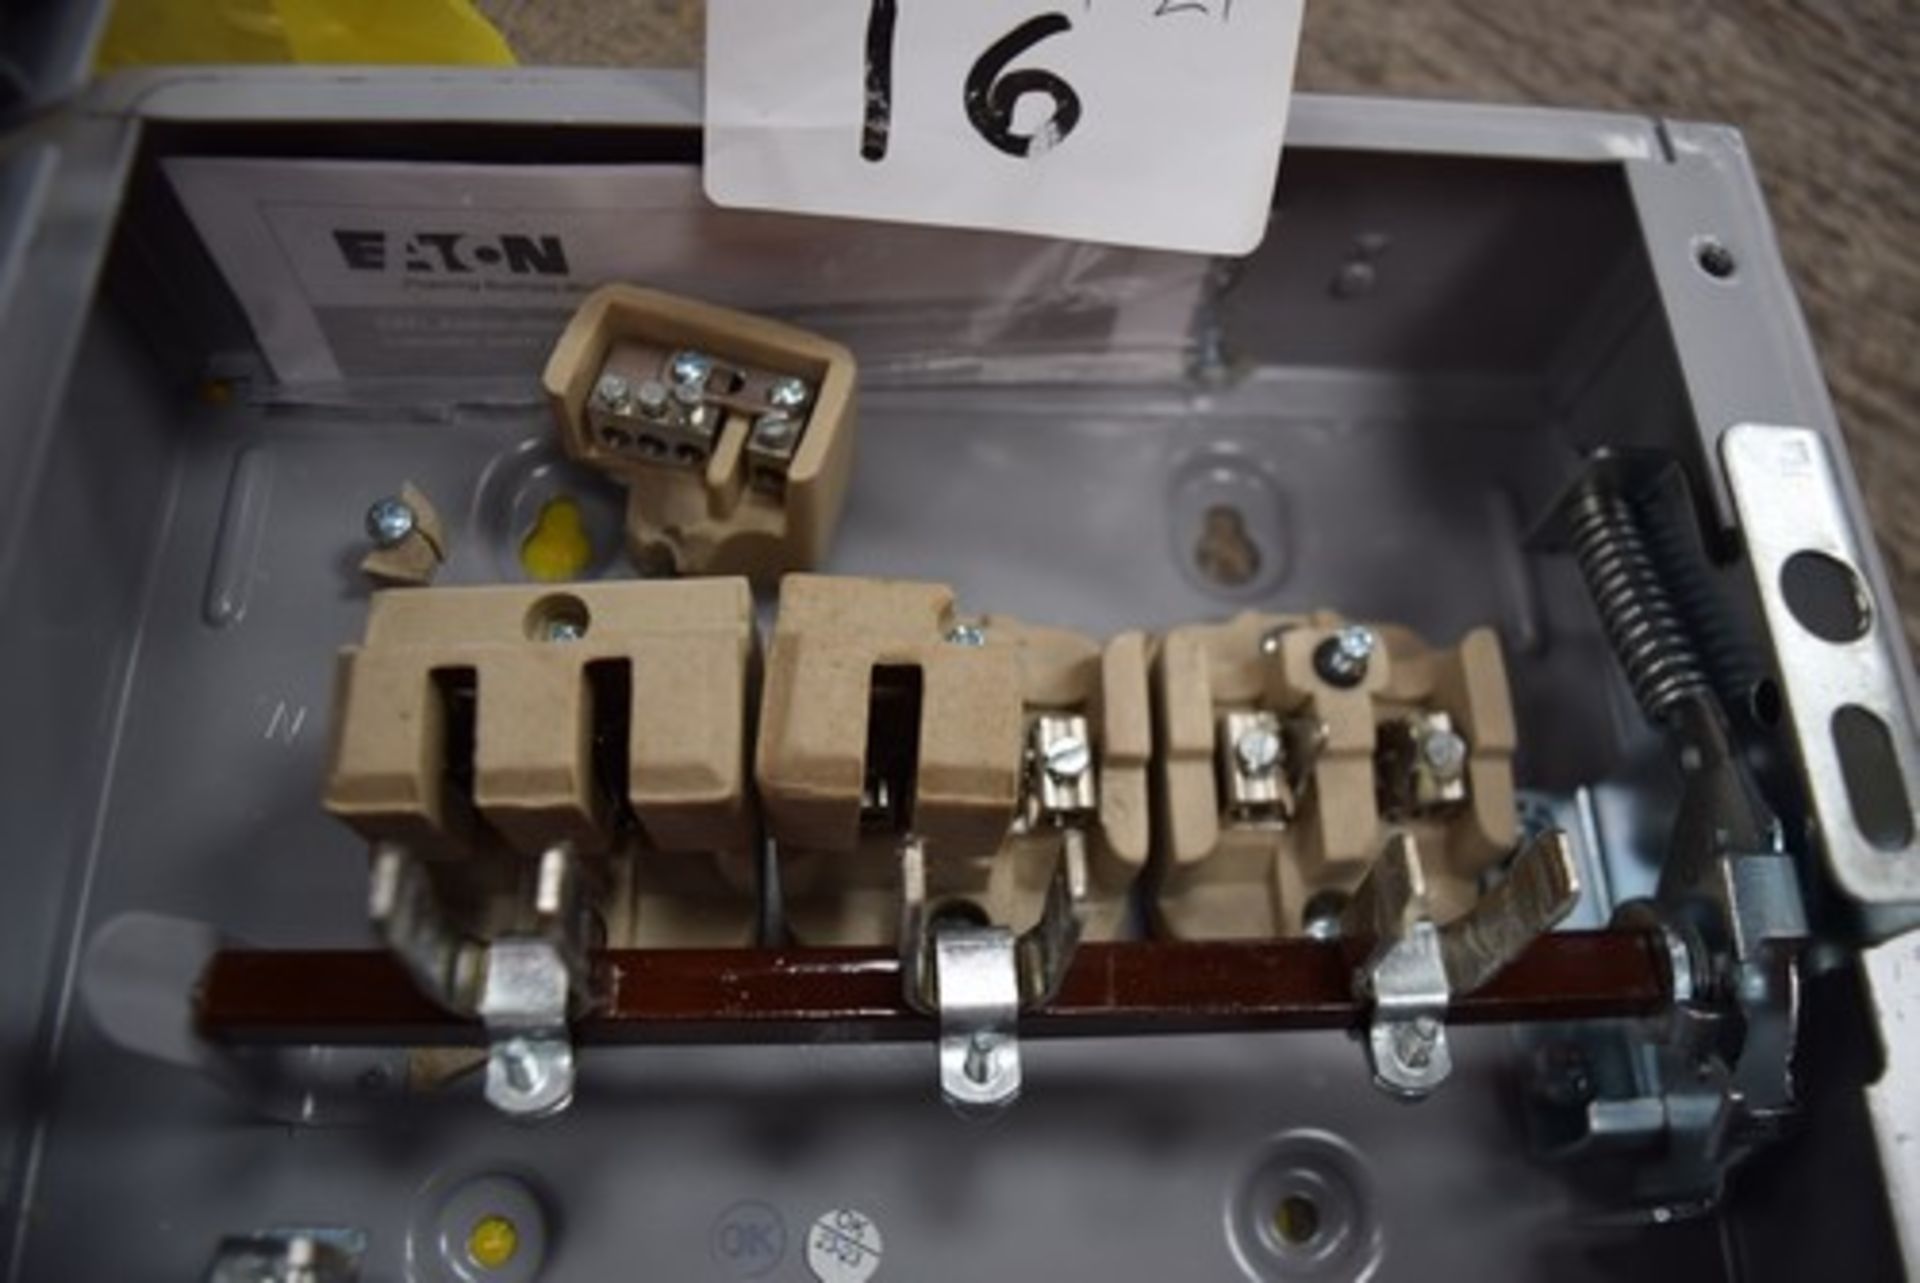 2 x Eaton Exel switch disconnectors, item no: 30AXTN2, Note: some ceramic insulators are broken - - Image 10 of 12